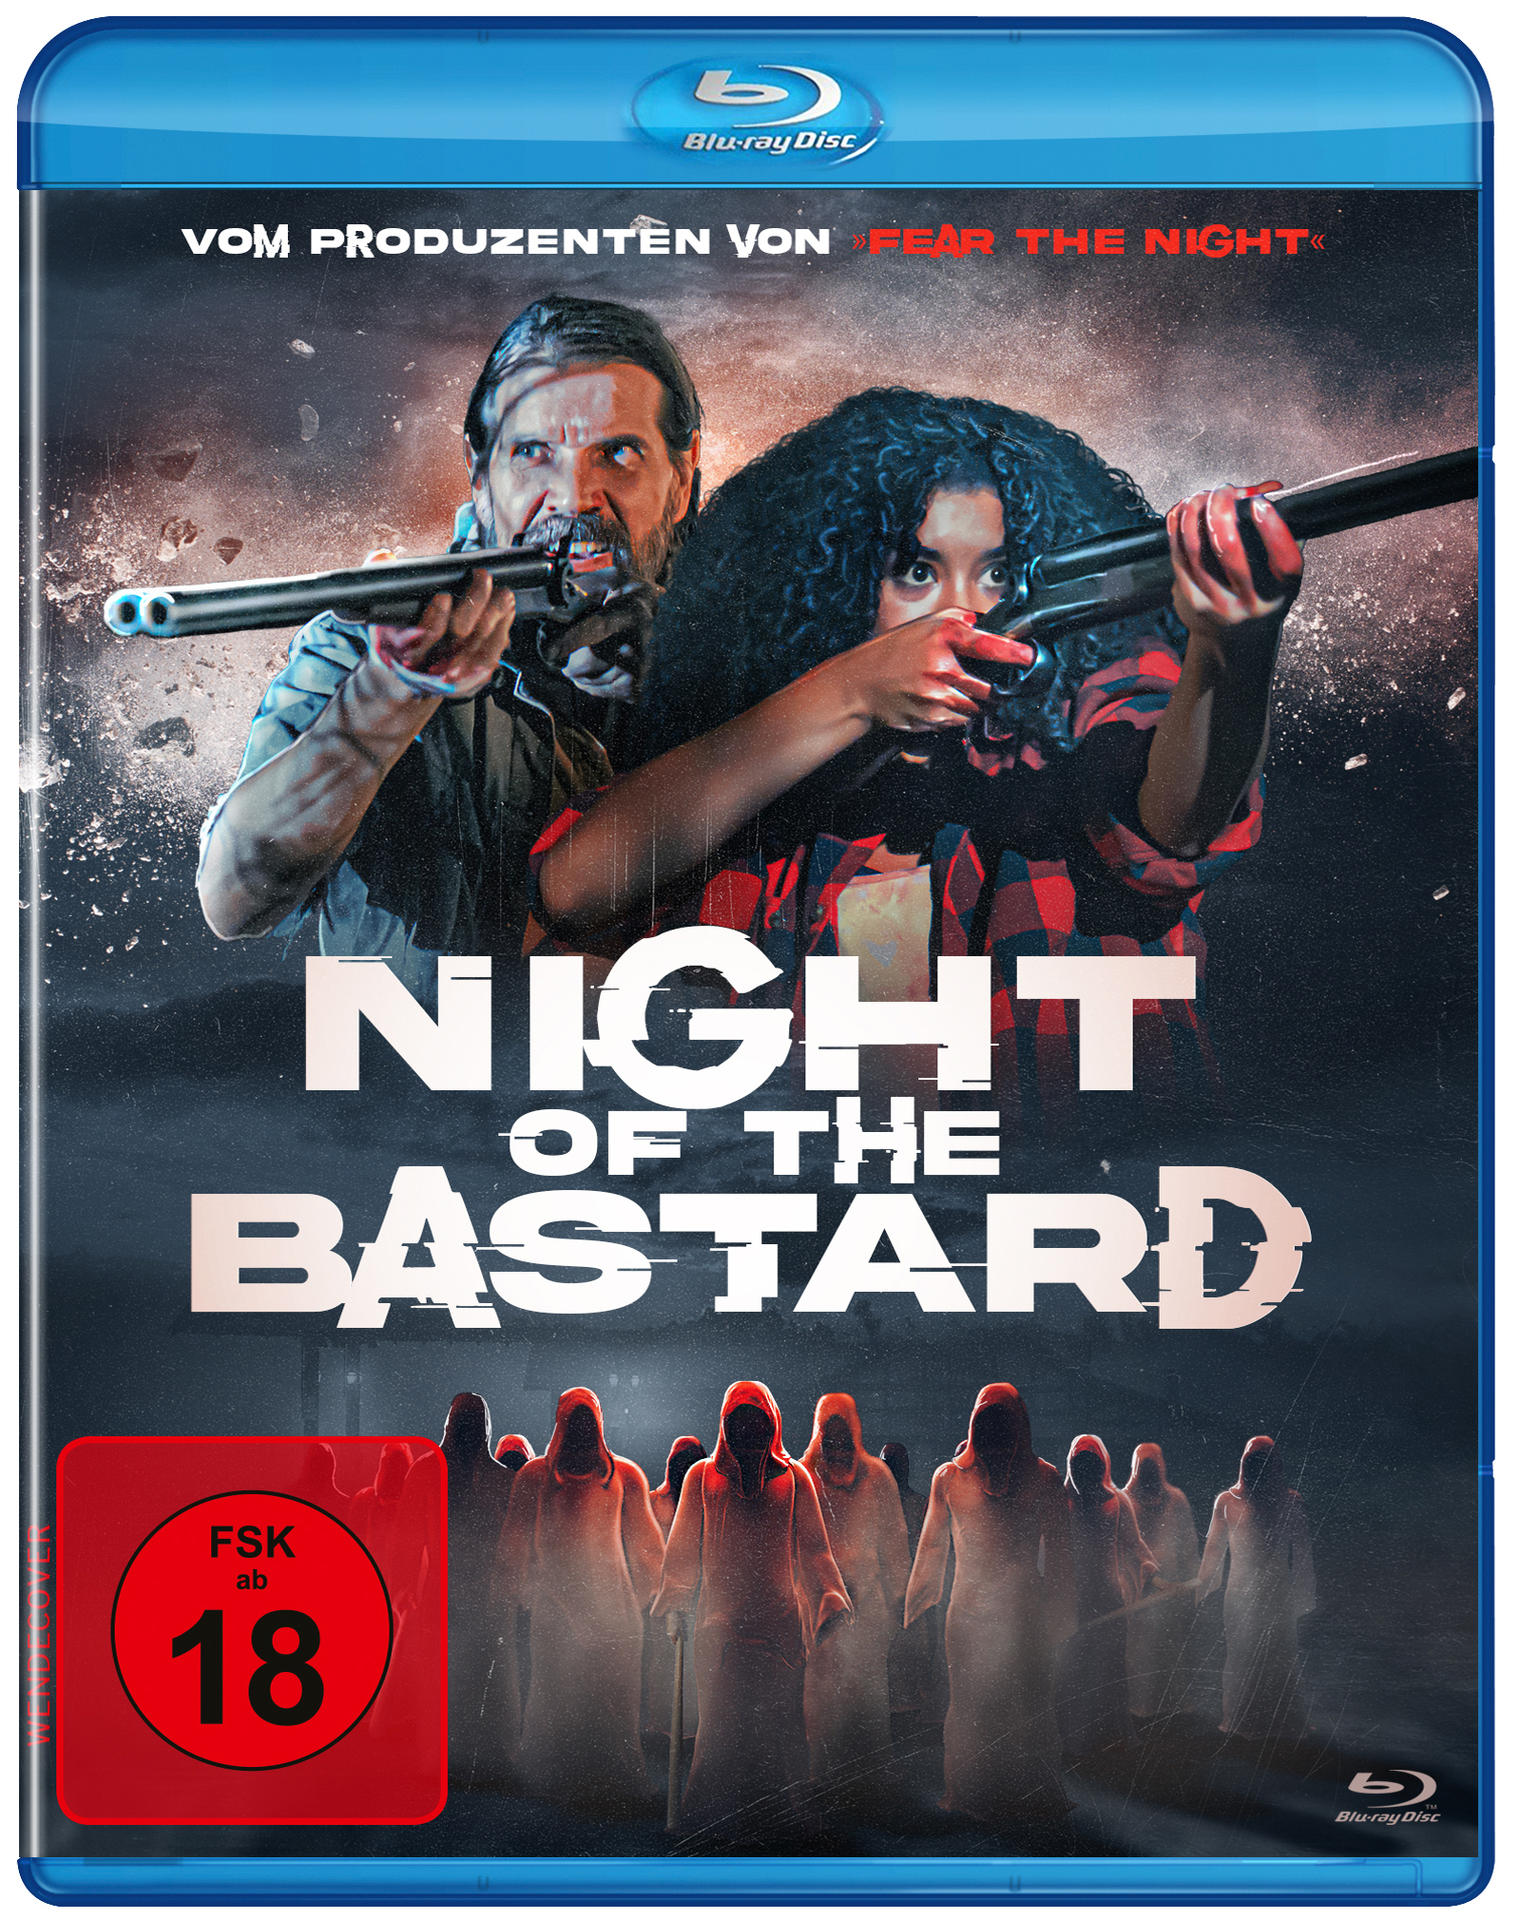 Night of the Blu-ray Bastard